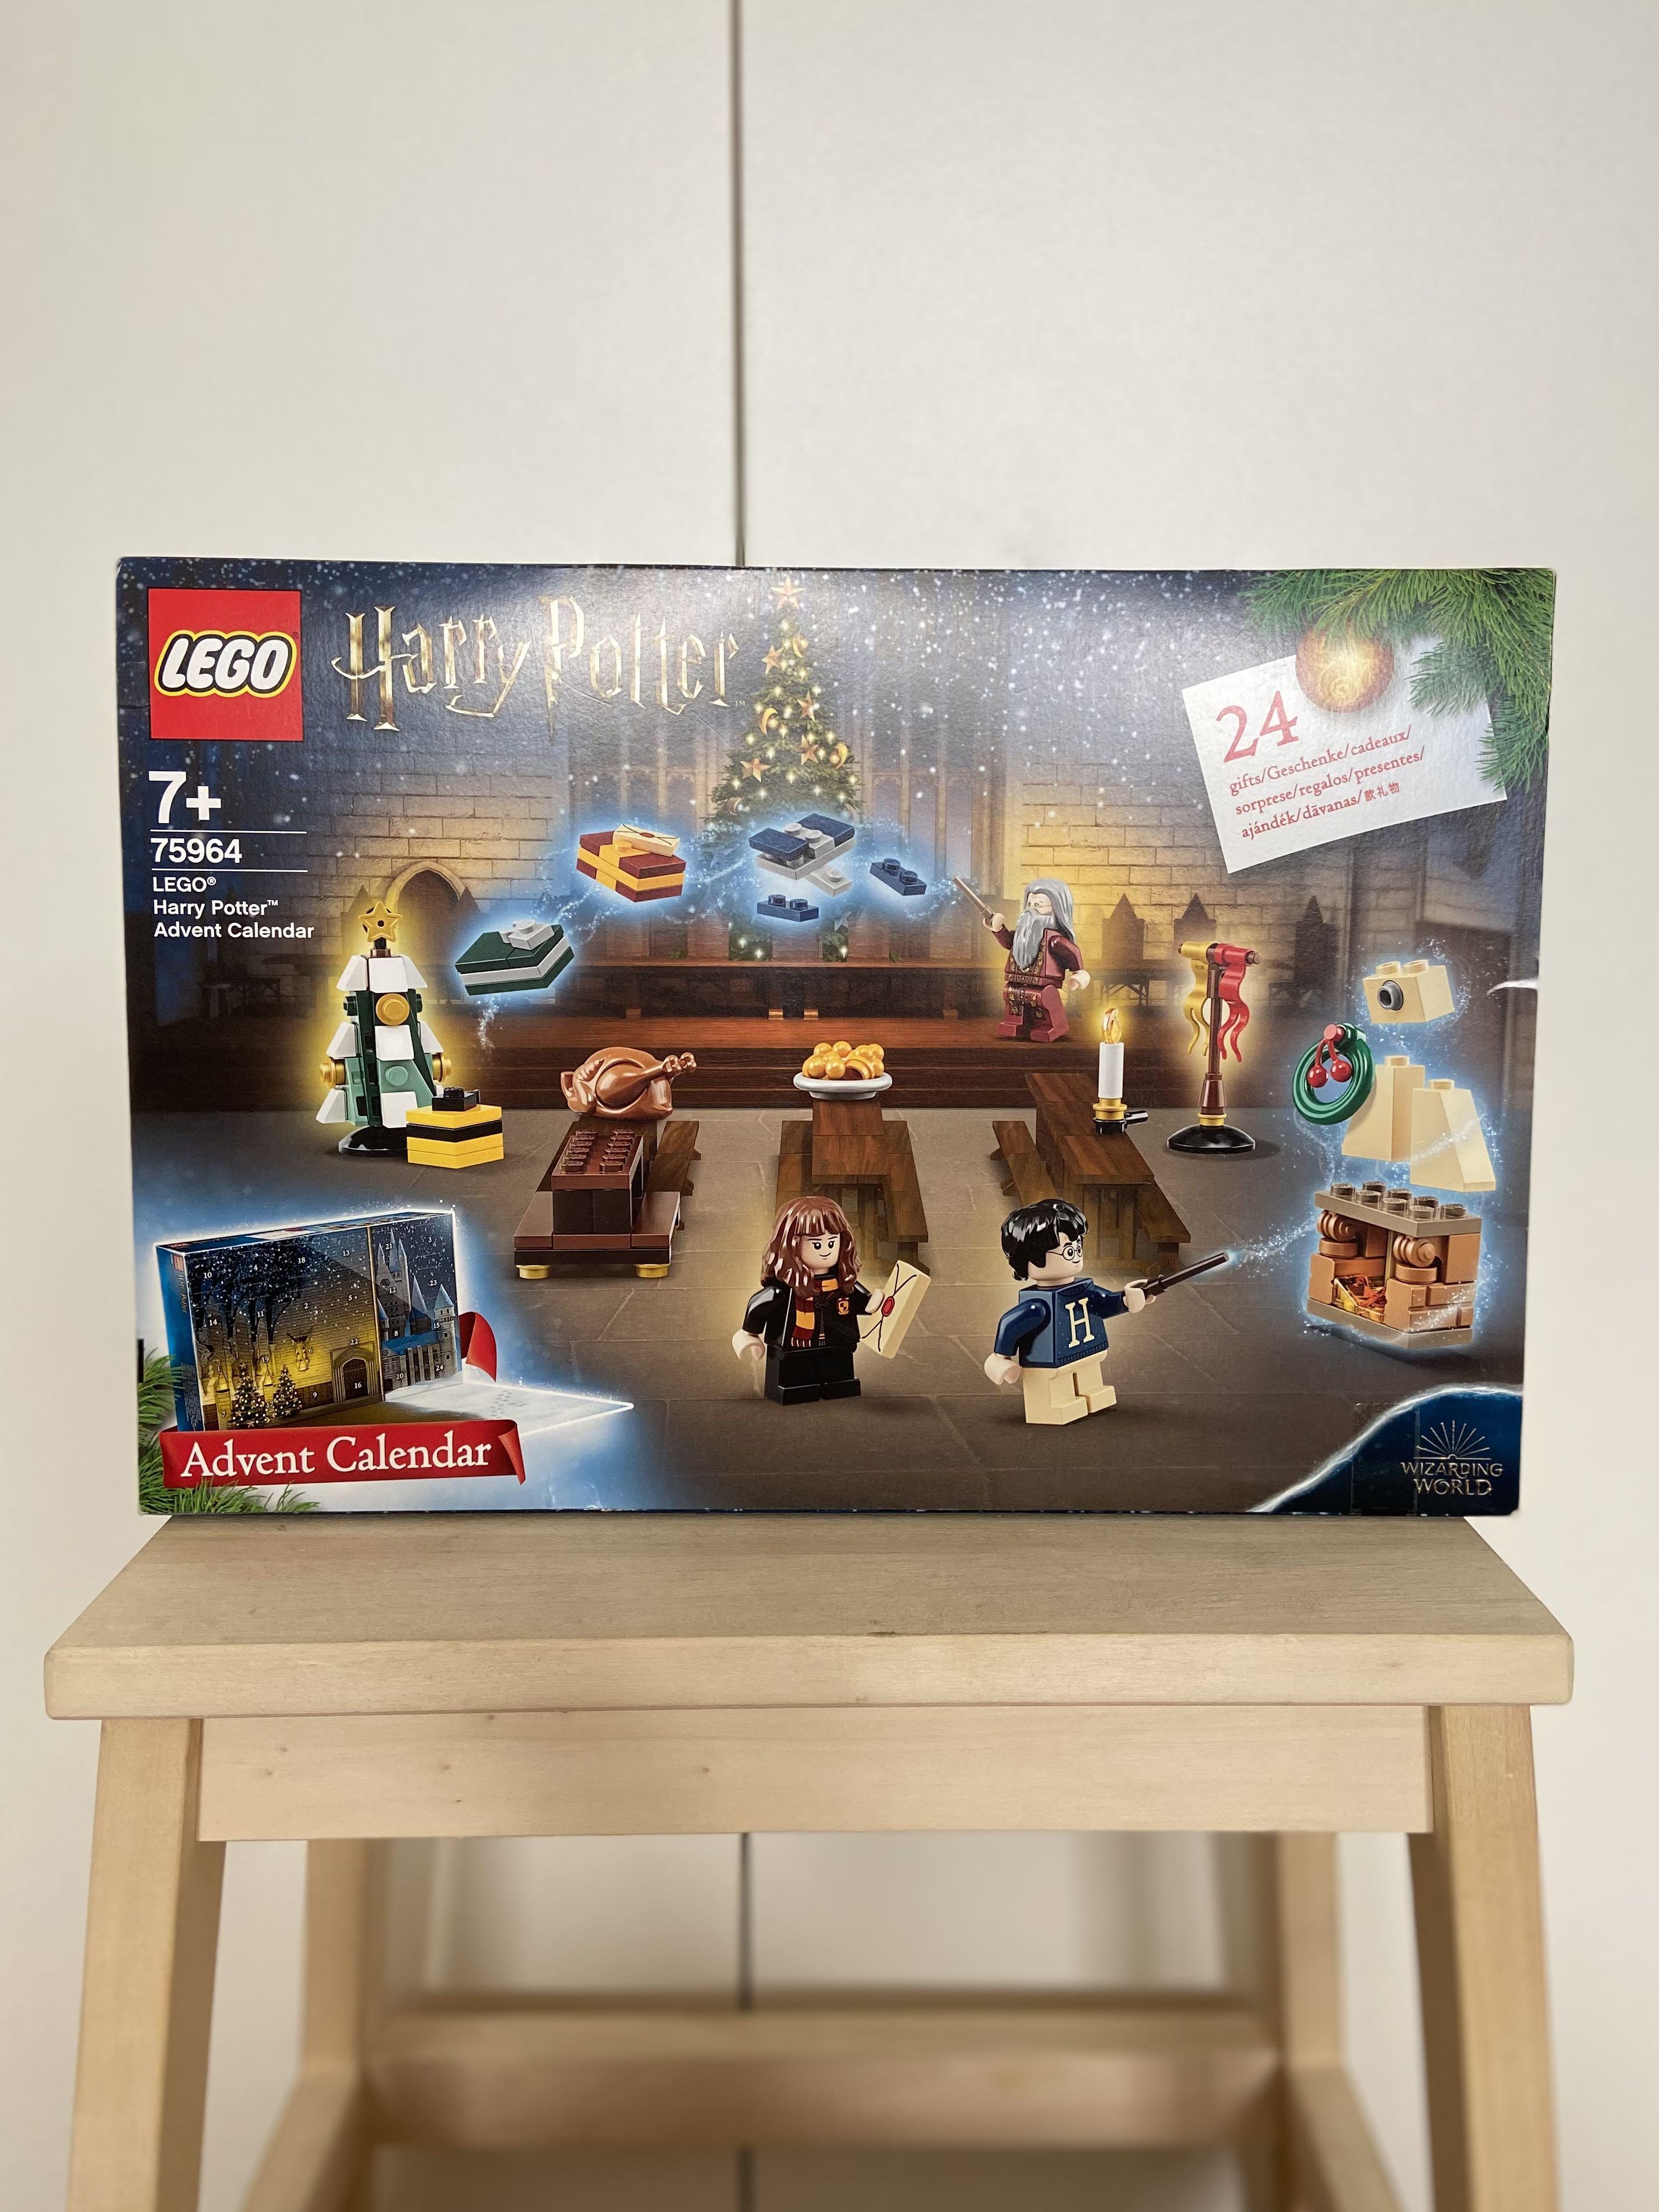 NEW & Sealed LEGO® Harry Potter 75964 Harry Potter Adventskalender 